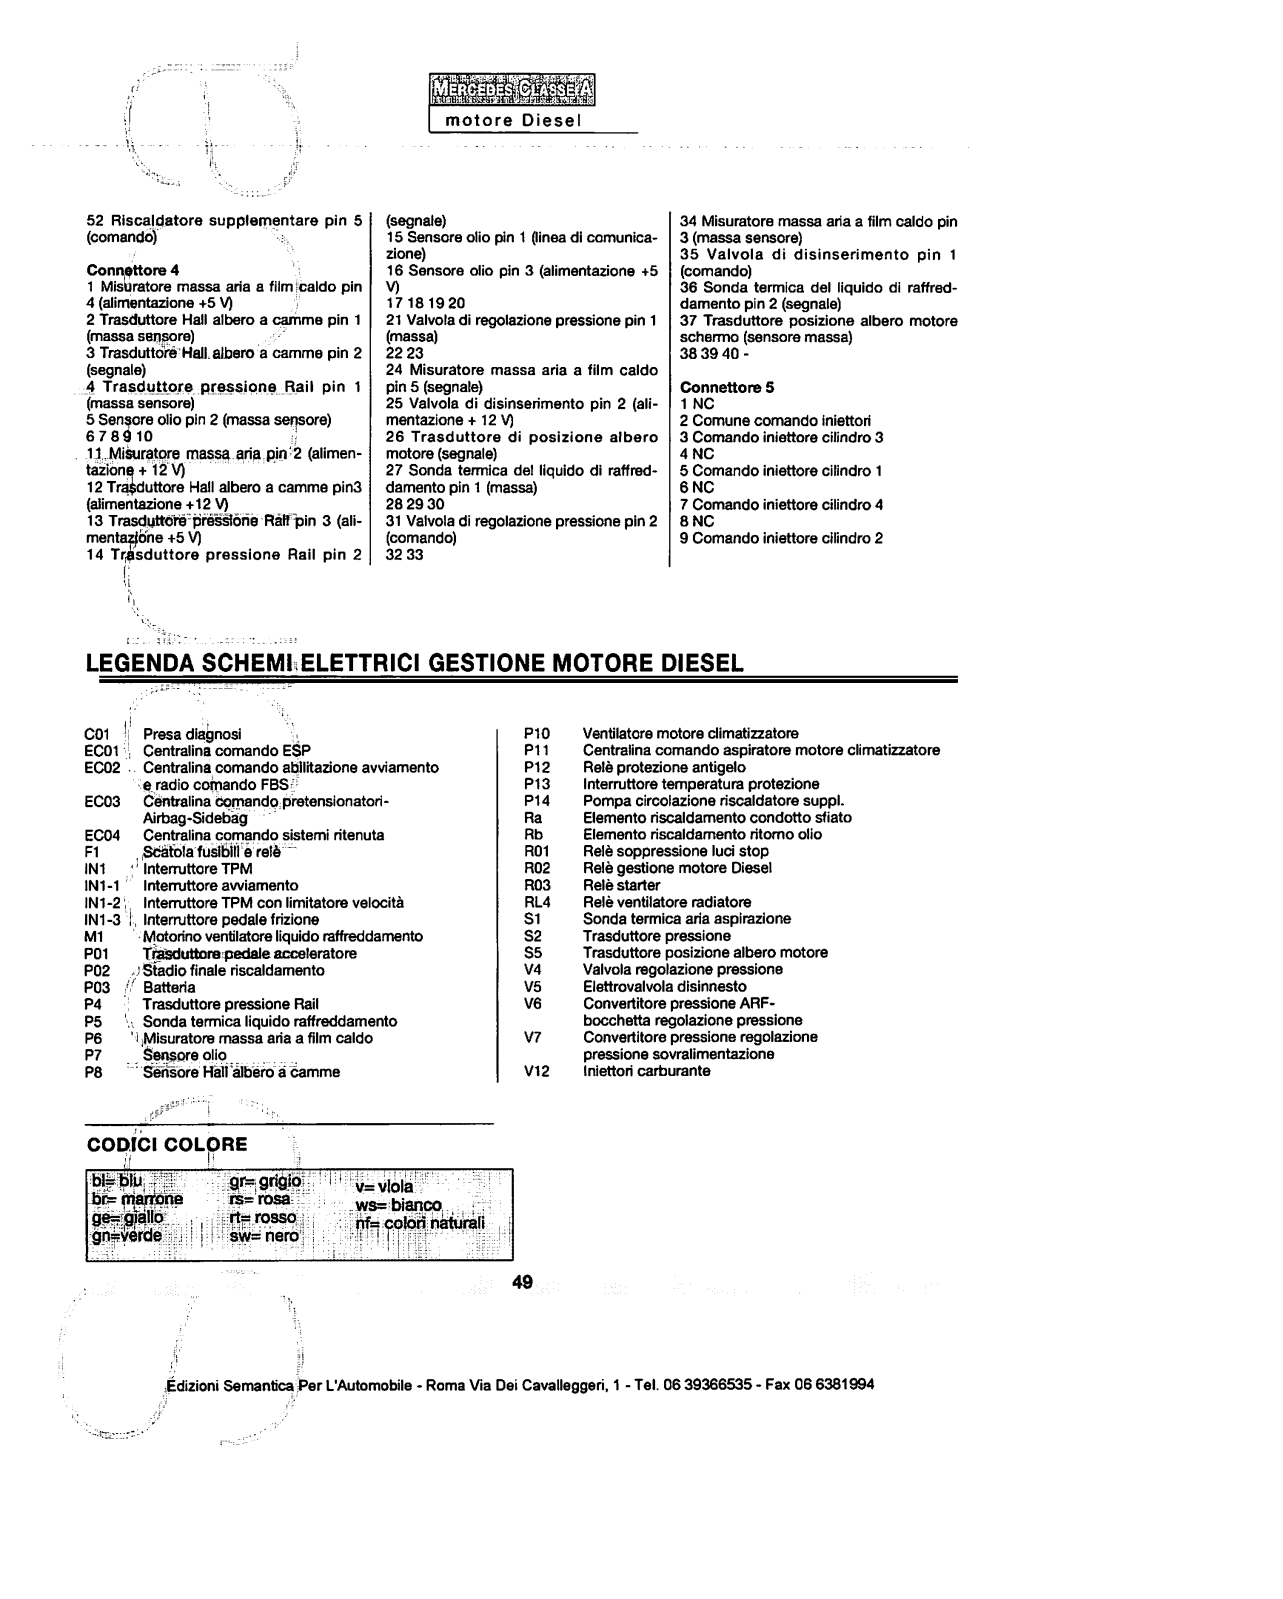 w168 - (W168): Manual técnico - tudo sobre - 1997 a 2004 - italiano 11ccnyb